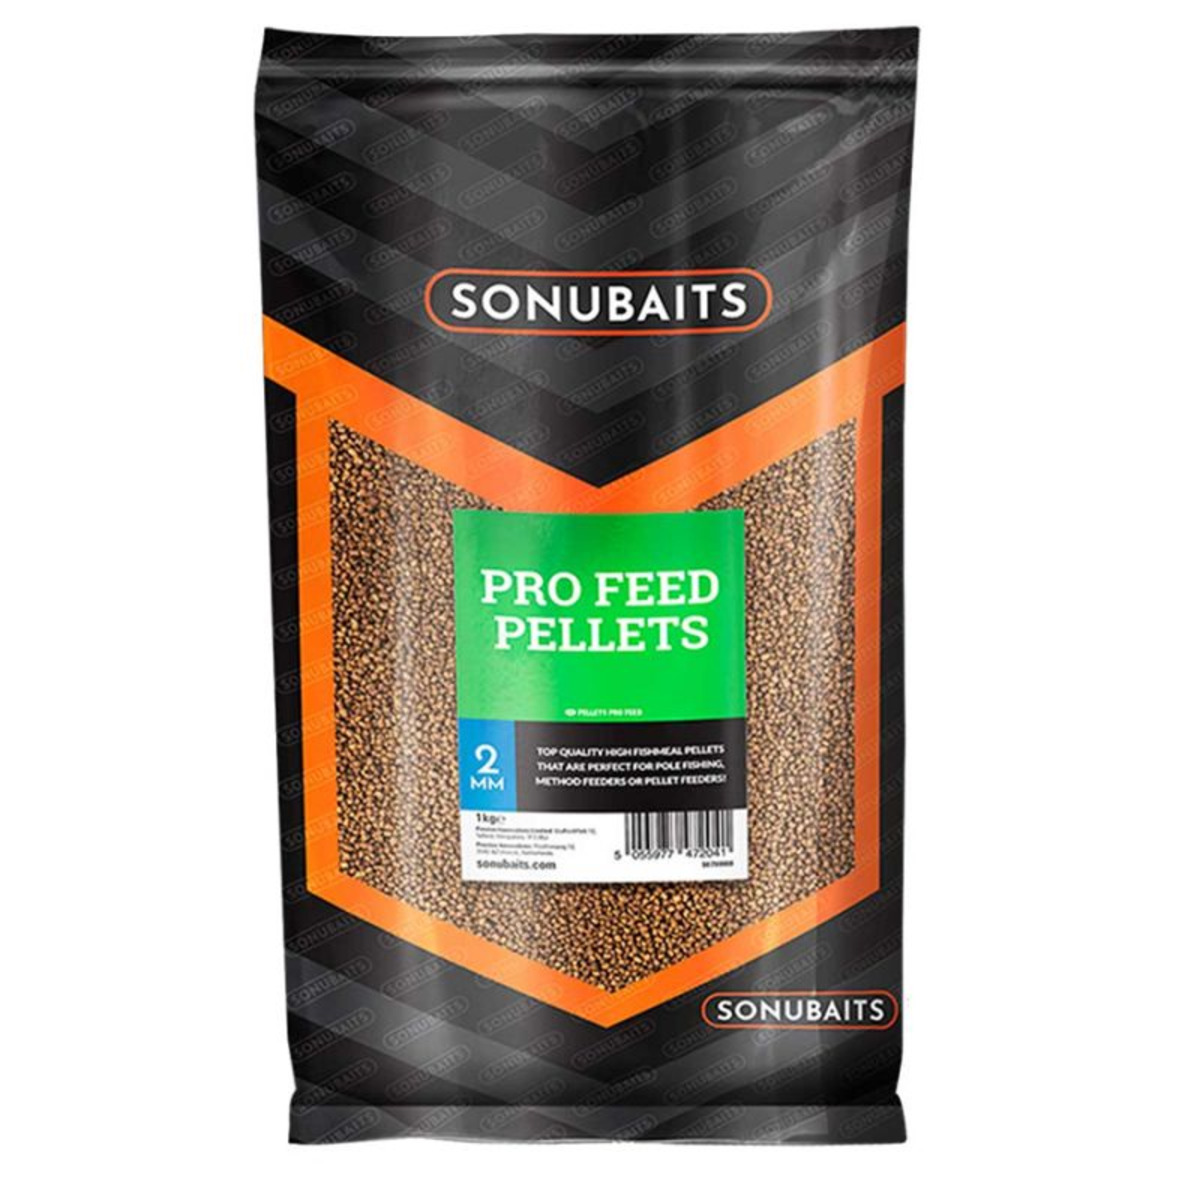 Sonubaits Pro Feed Pellets - 2 mm - 1 kg